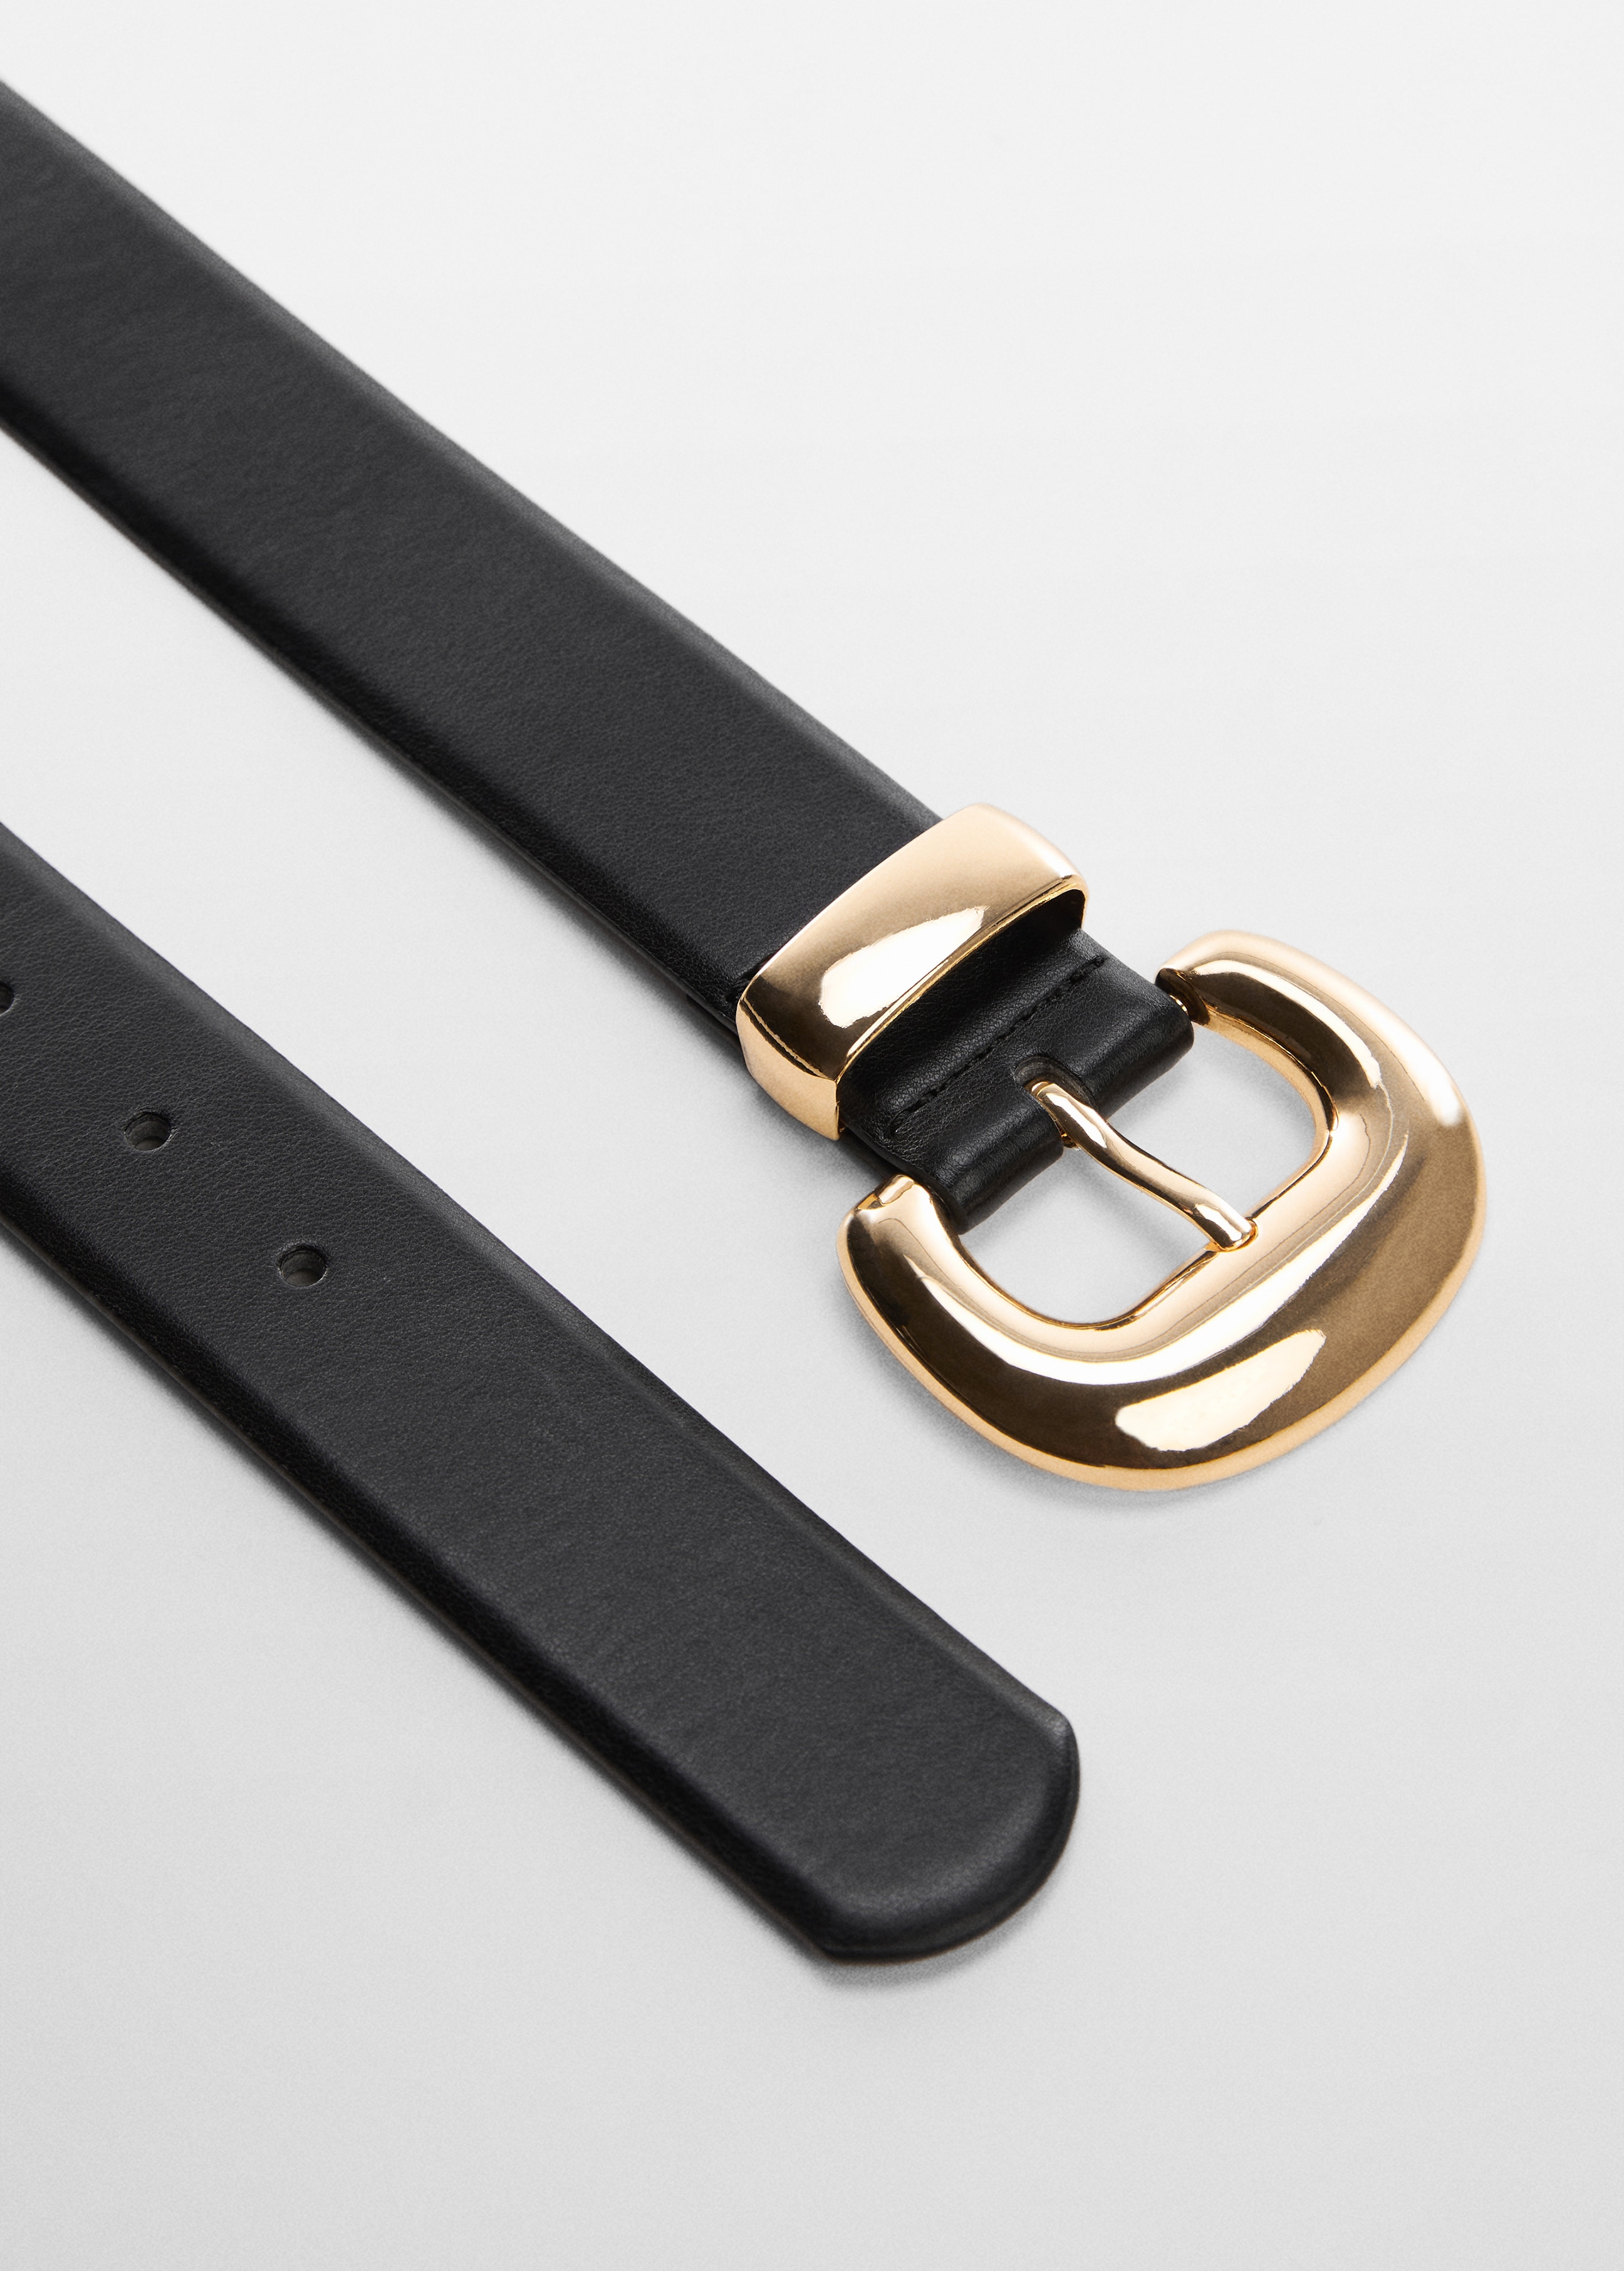 Metal buckle belt - Details of the article 1